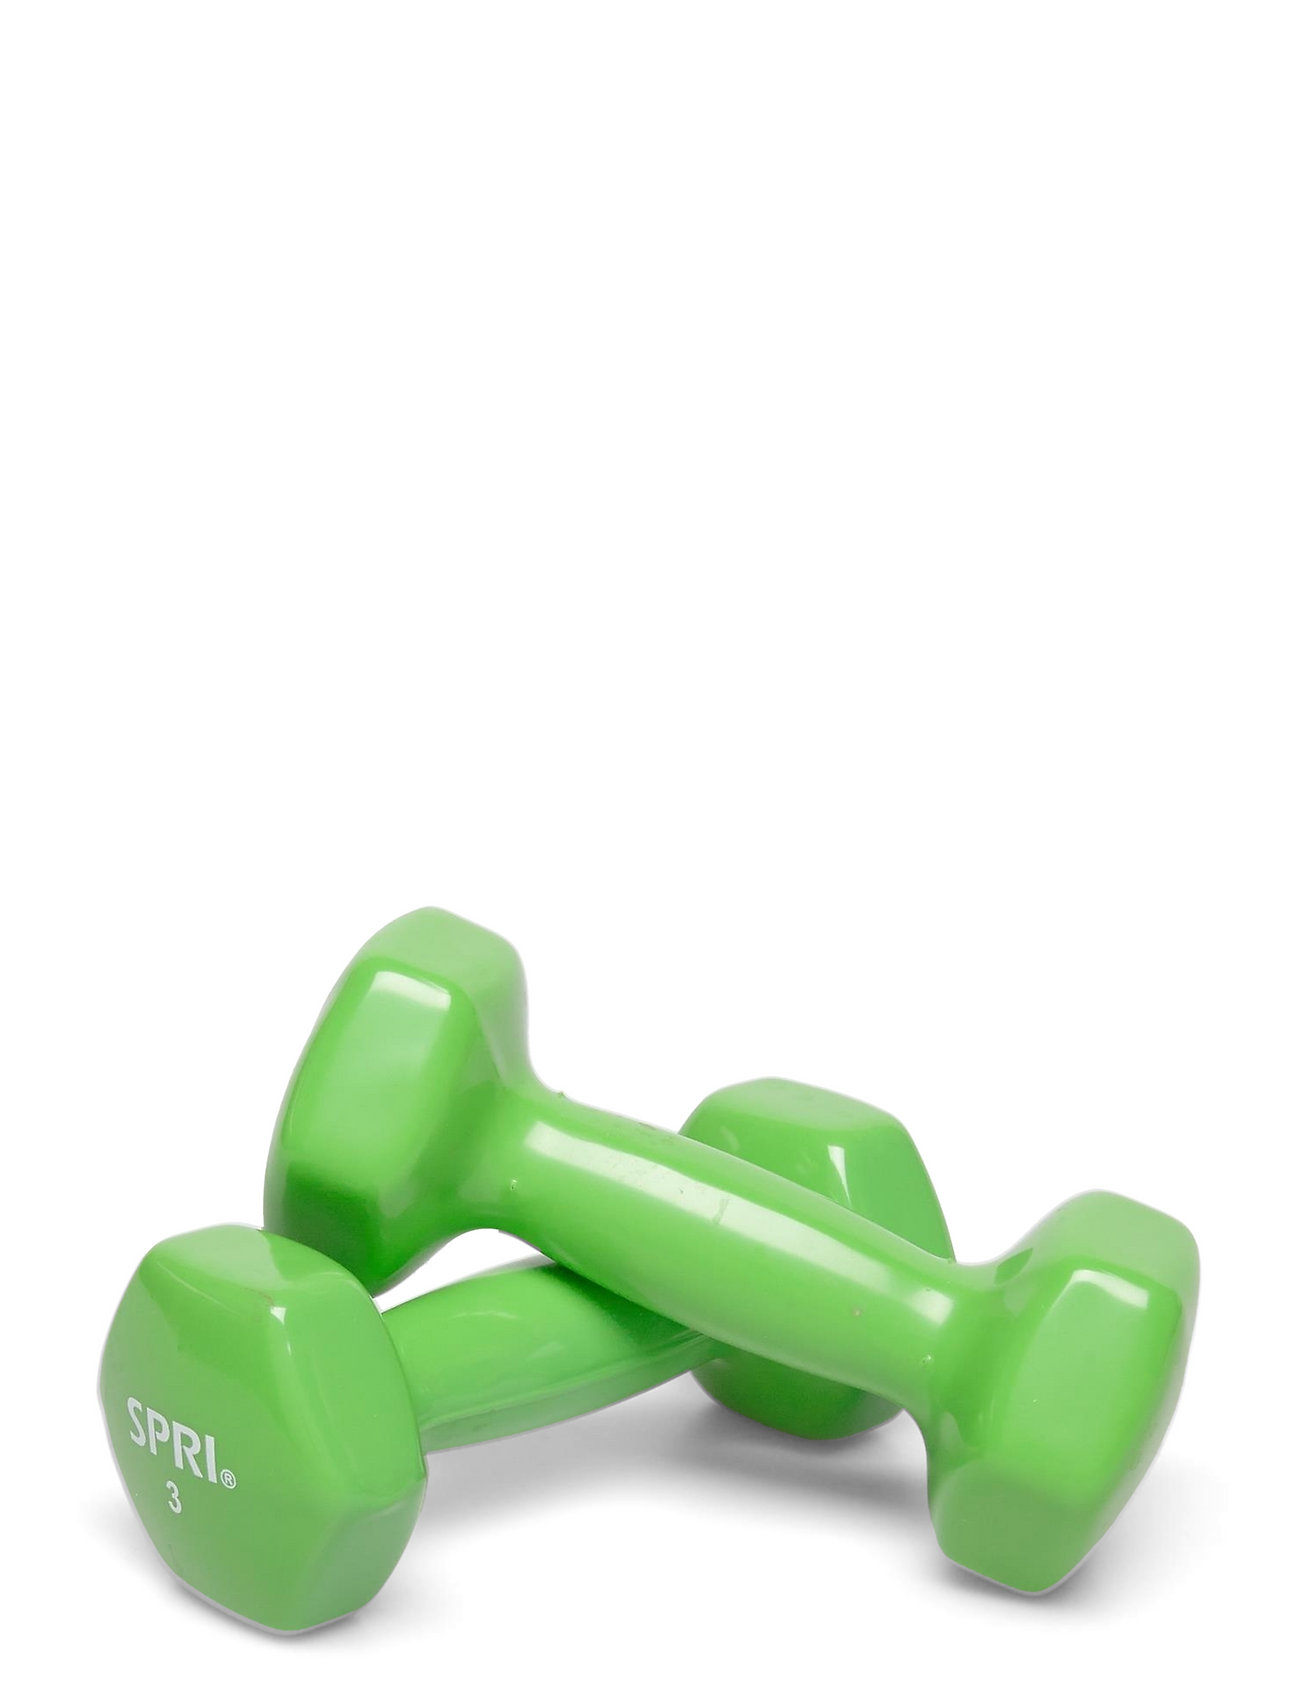 Spri Dumbbell Vinyl 1,4Kg/3Lb Pair Sport Sports Equipment Workout Equipment Gym Weights Green Spri